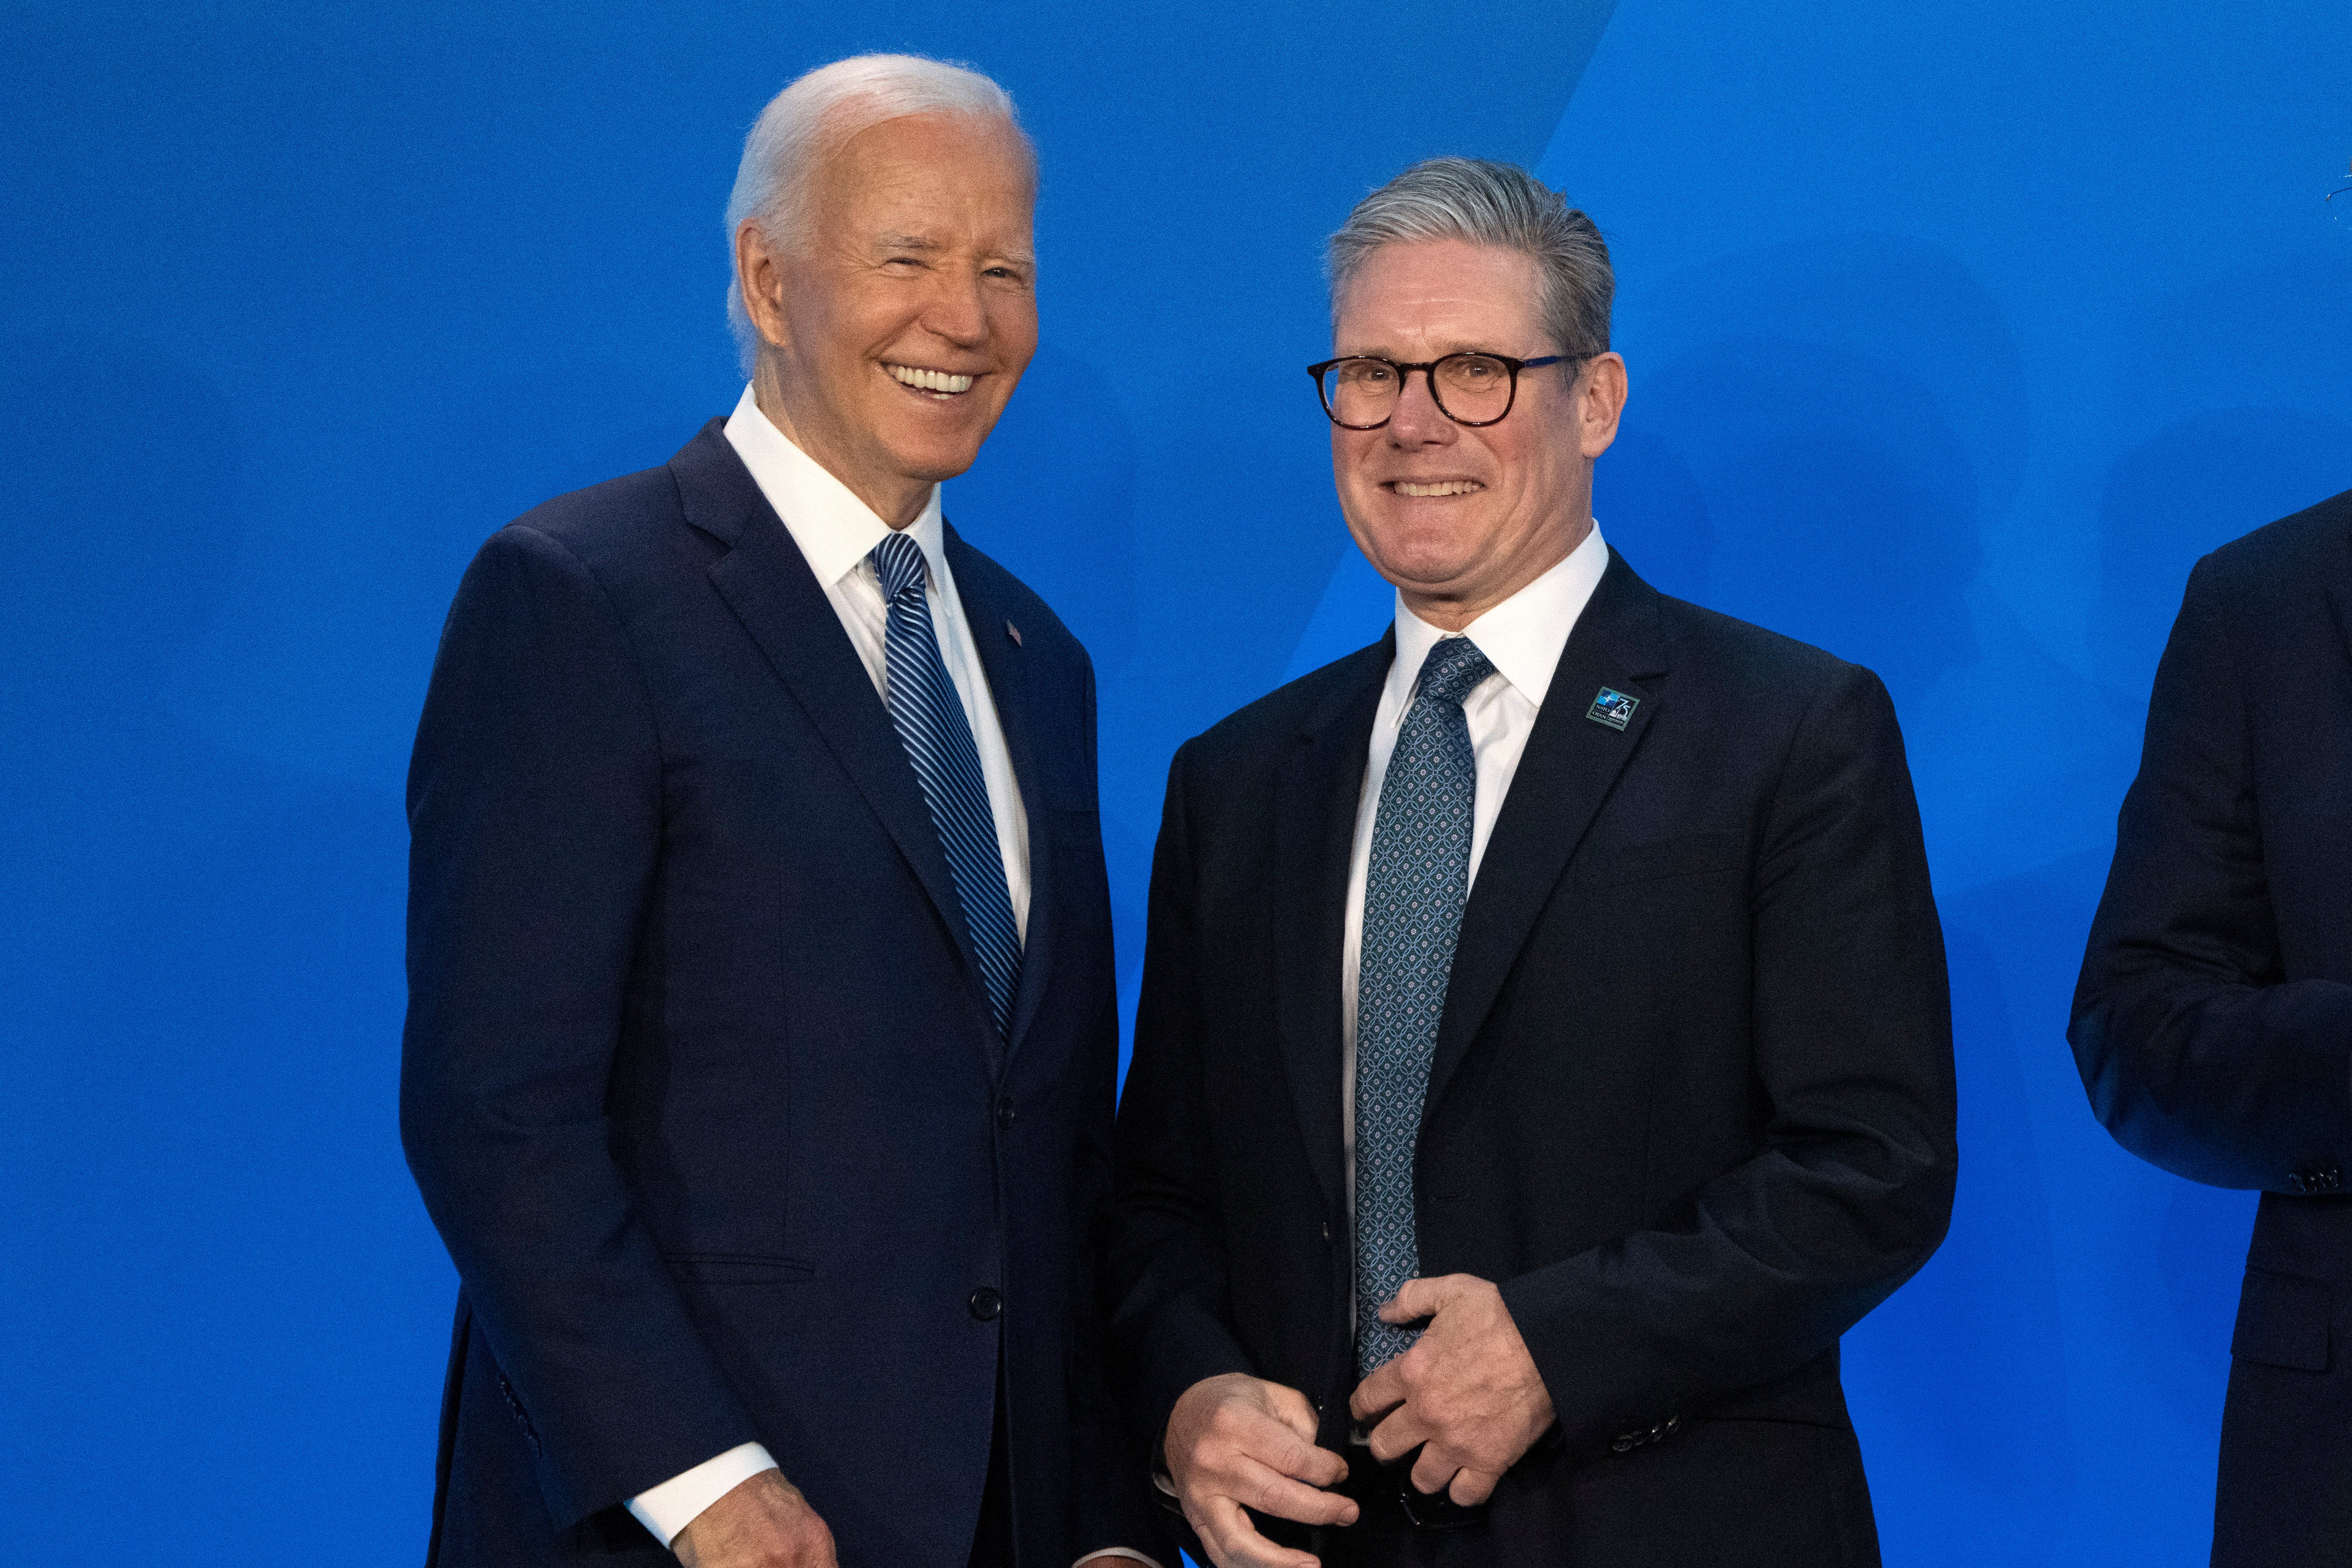 Starmer and Biden met yesterday at Nato